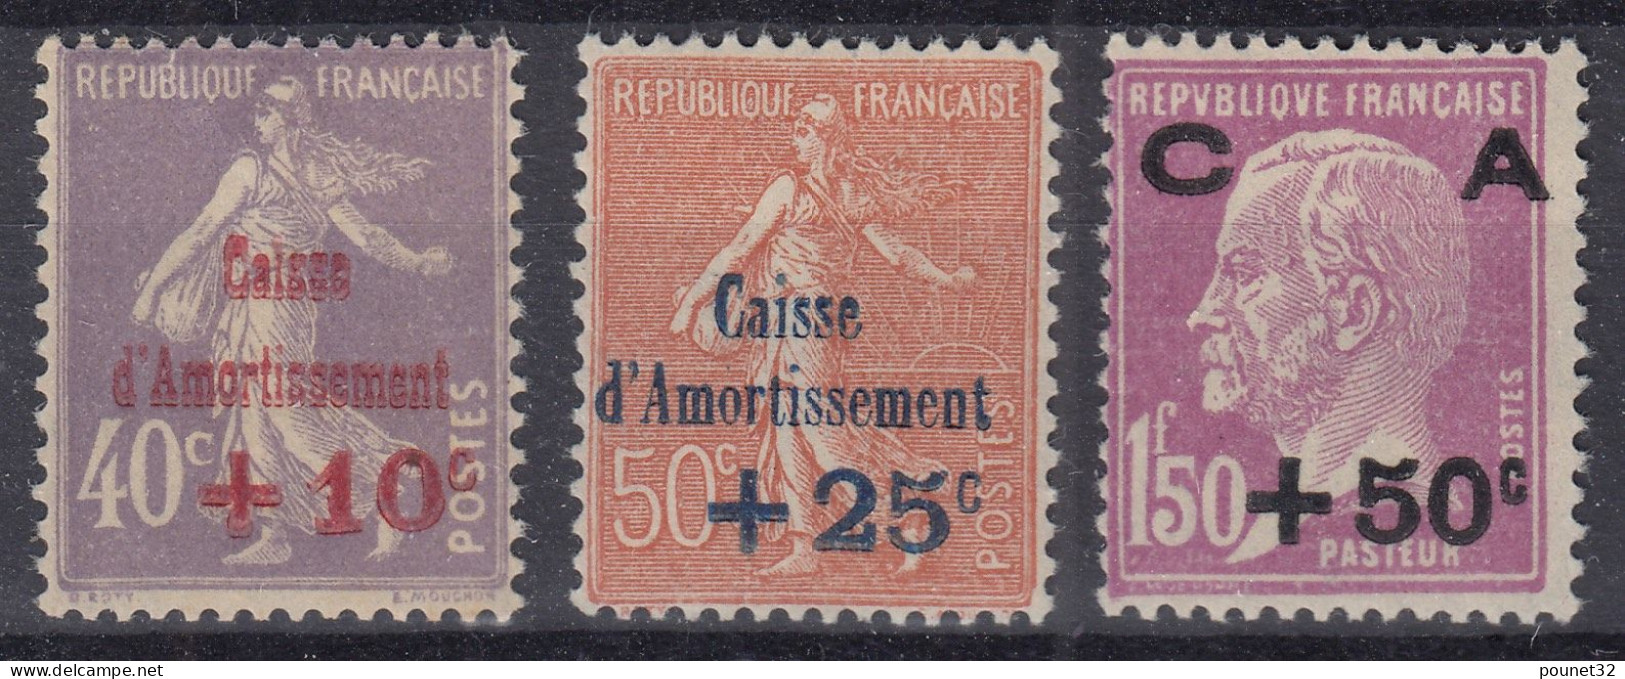 FRANCE CAISSE D'AMORTISSEMENT SERIE N° 249/251 NEUVE ** GOMME SANS CHARNIERE - 1927-31 Sinking Fund